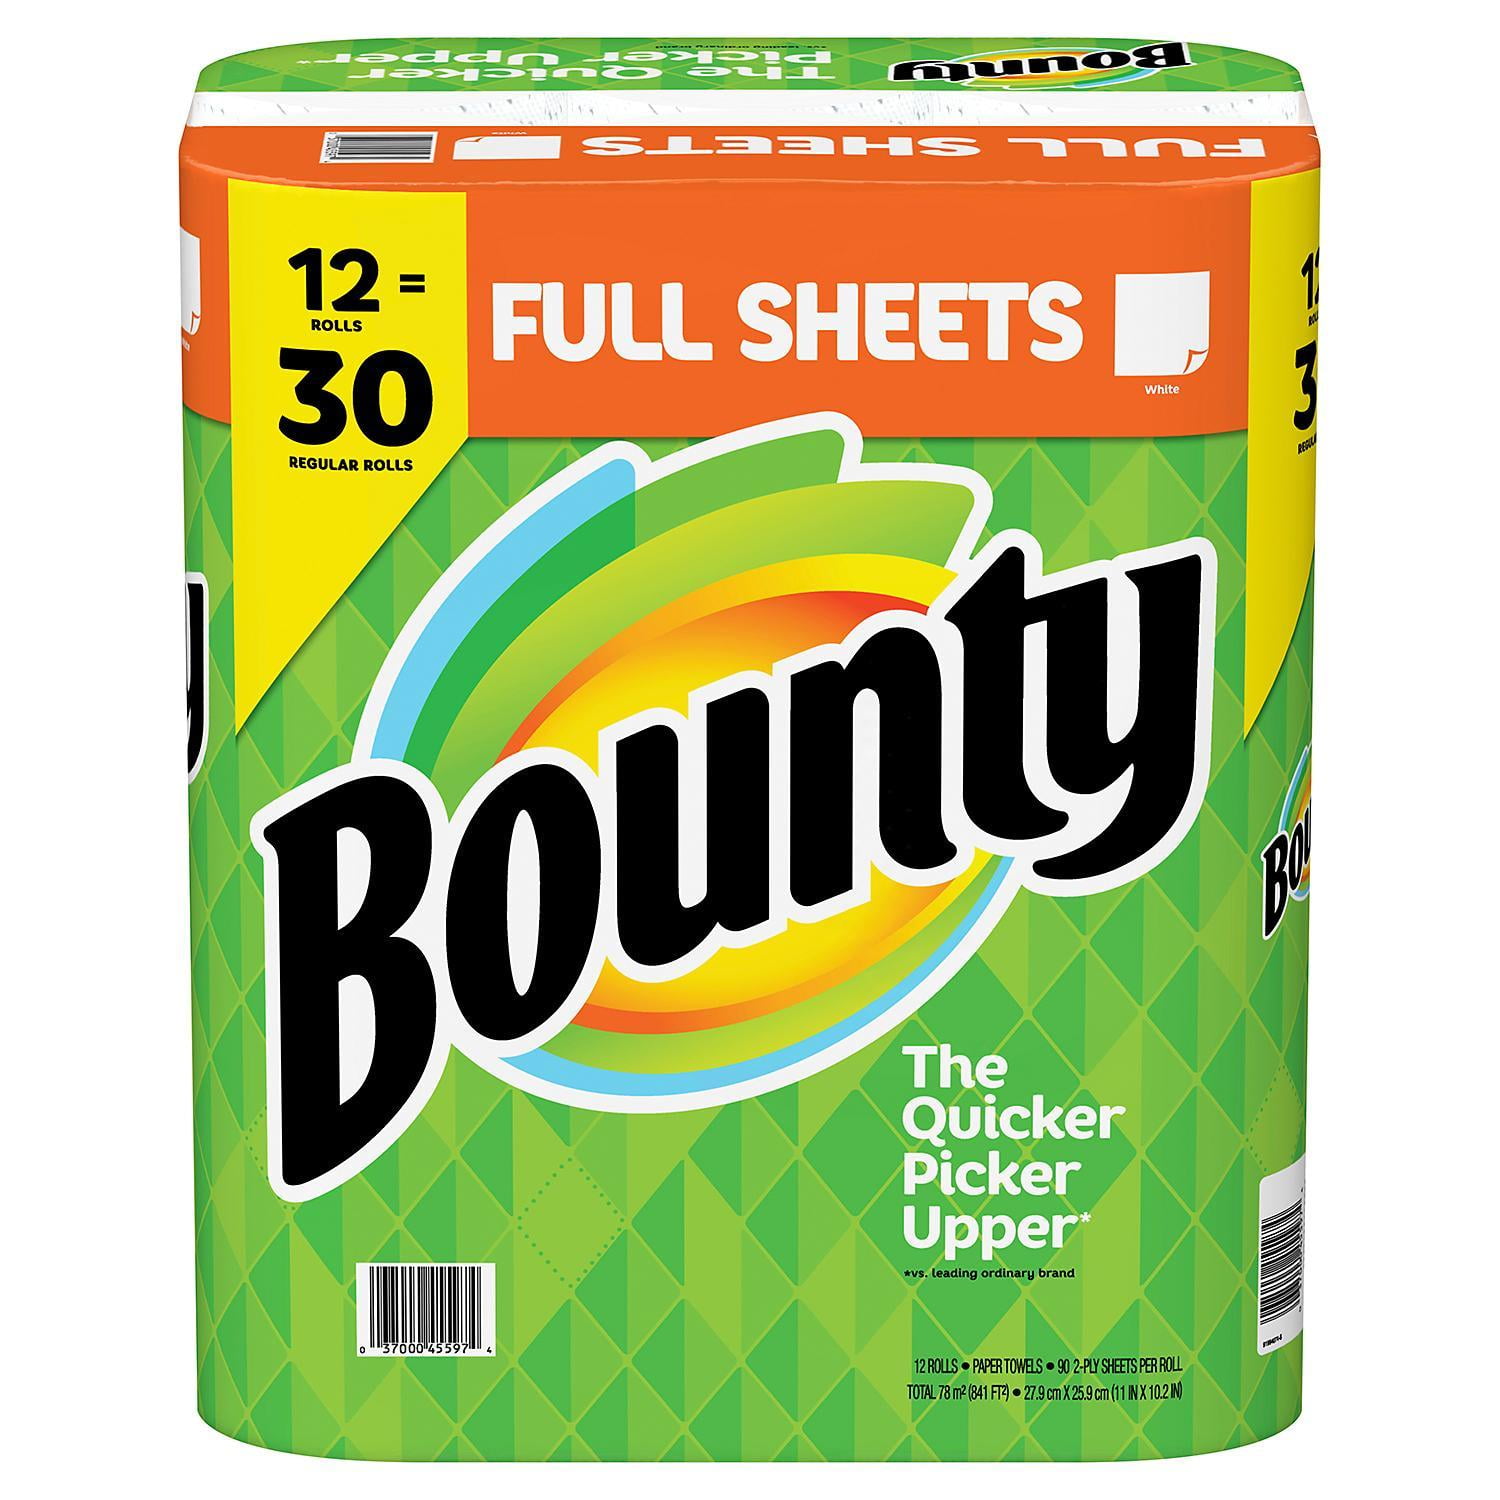 Flex-a-Size Paper Towels Presto Amazon Brand 12 count Huge Roll 